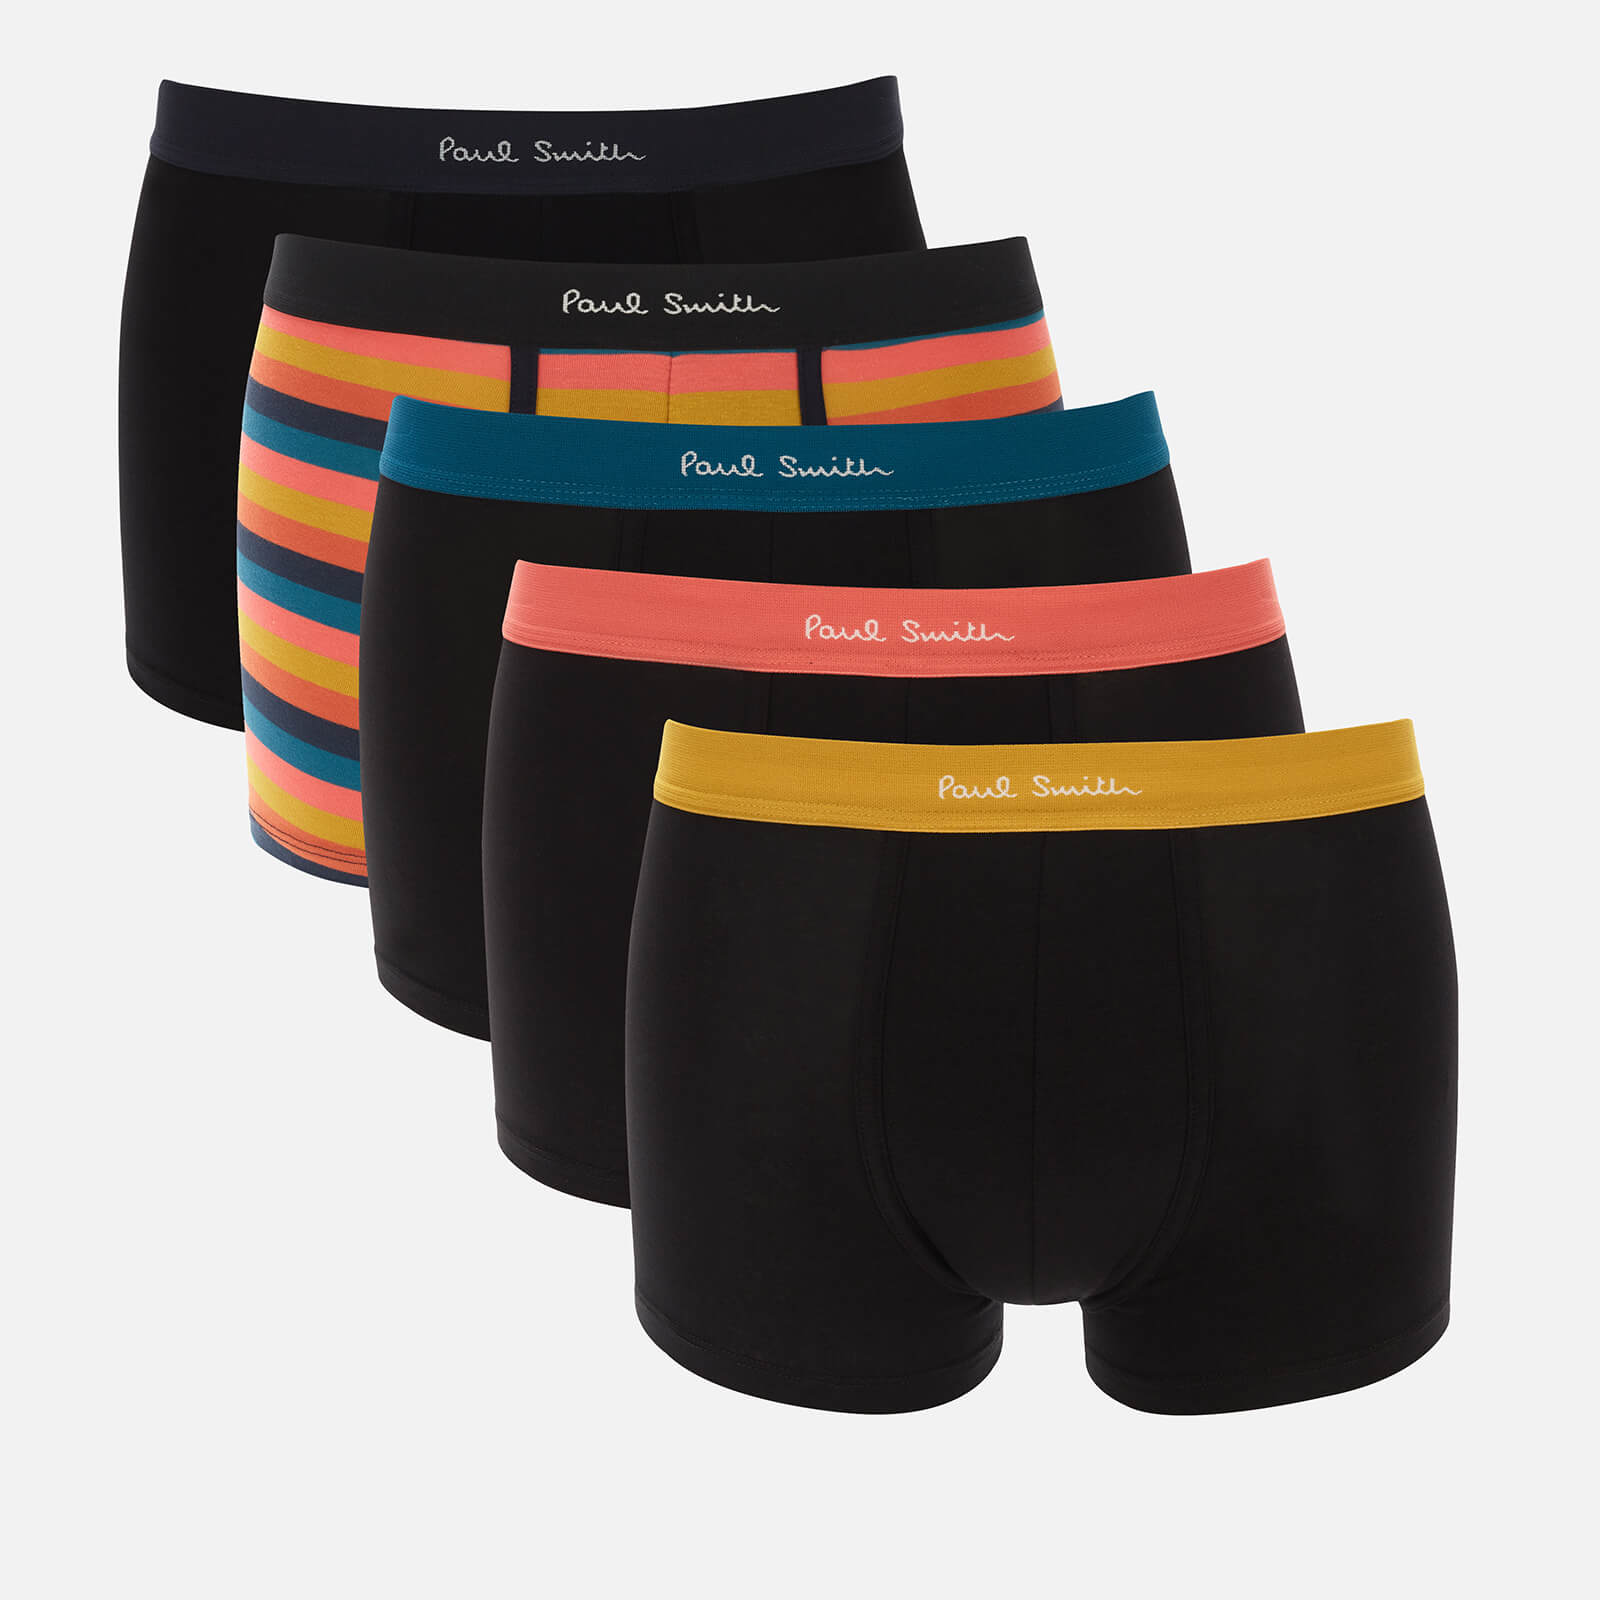 Paul Smith Loungewear Men's 5 Pack Stripe Mix Boxer Shorts - Multi 2